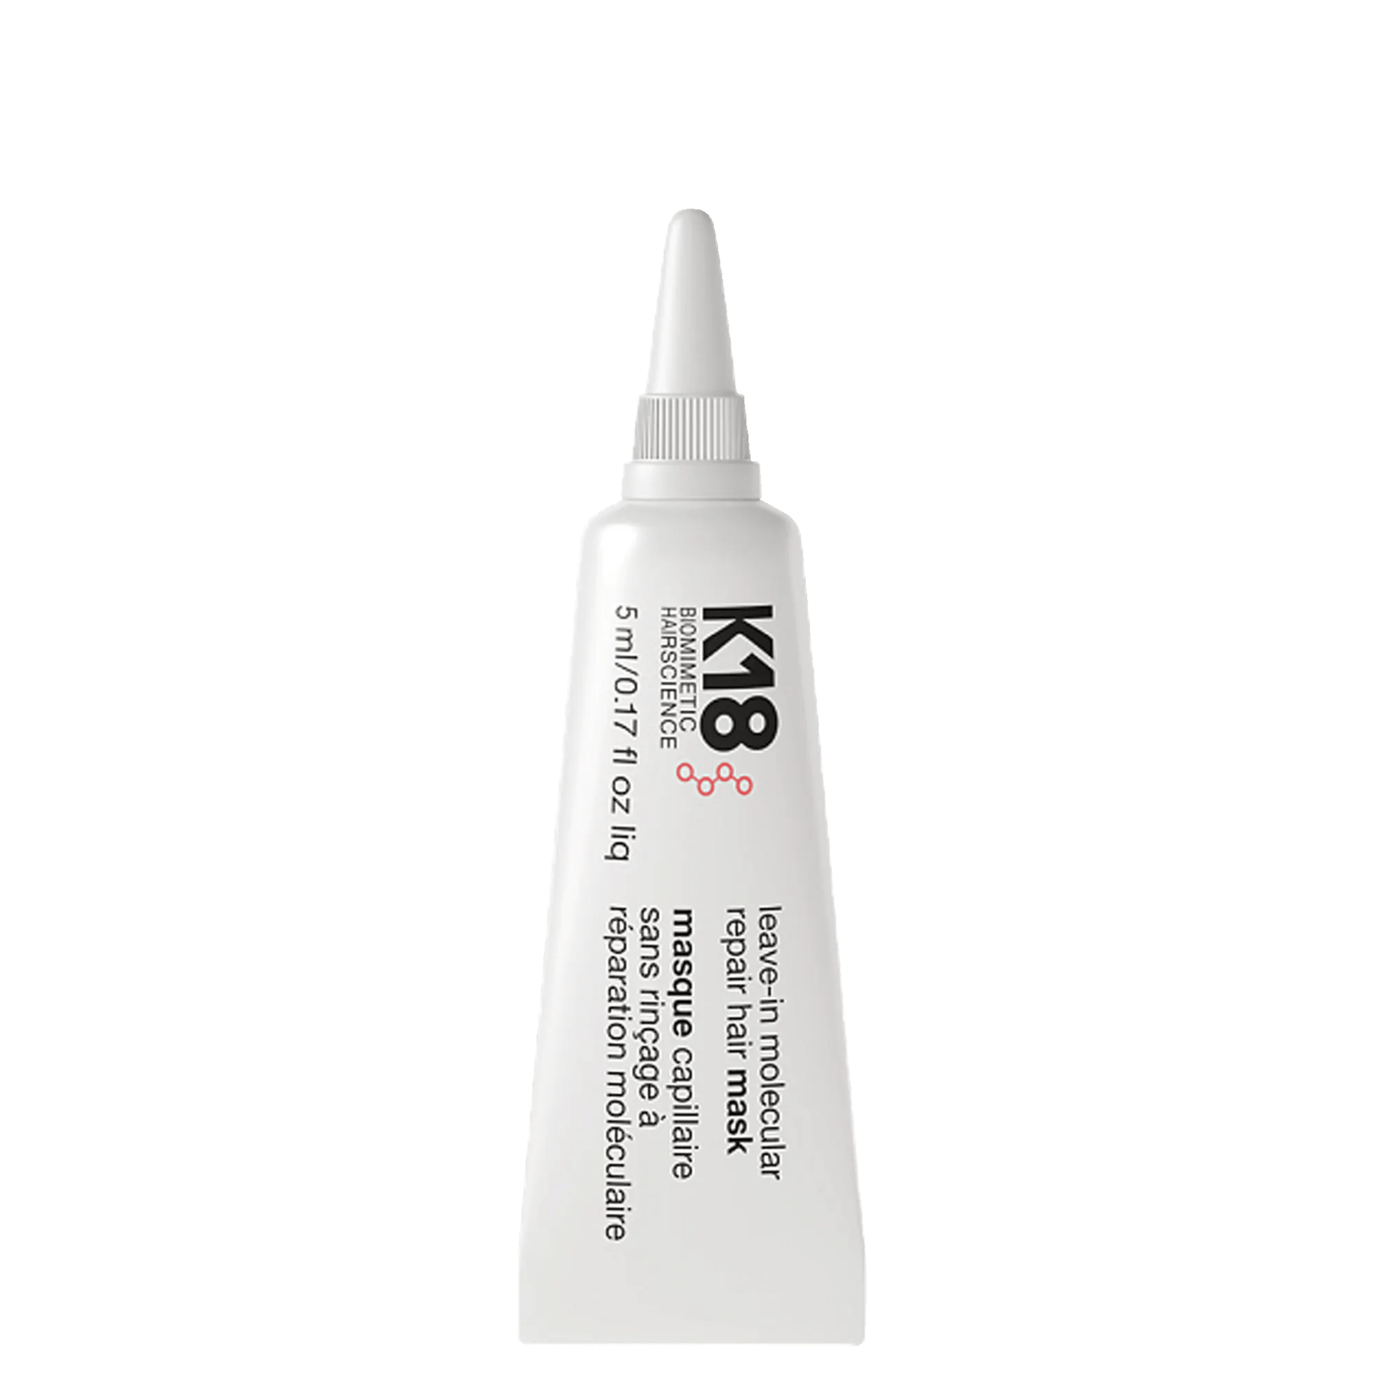 K18 Treatment K18 Repair Hair Mask 5ml